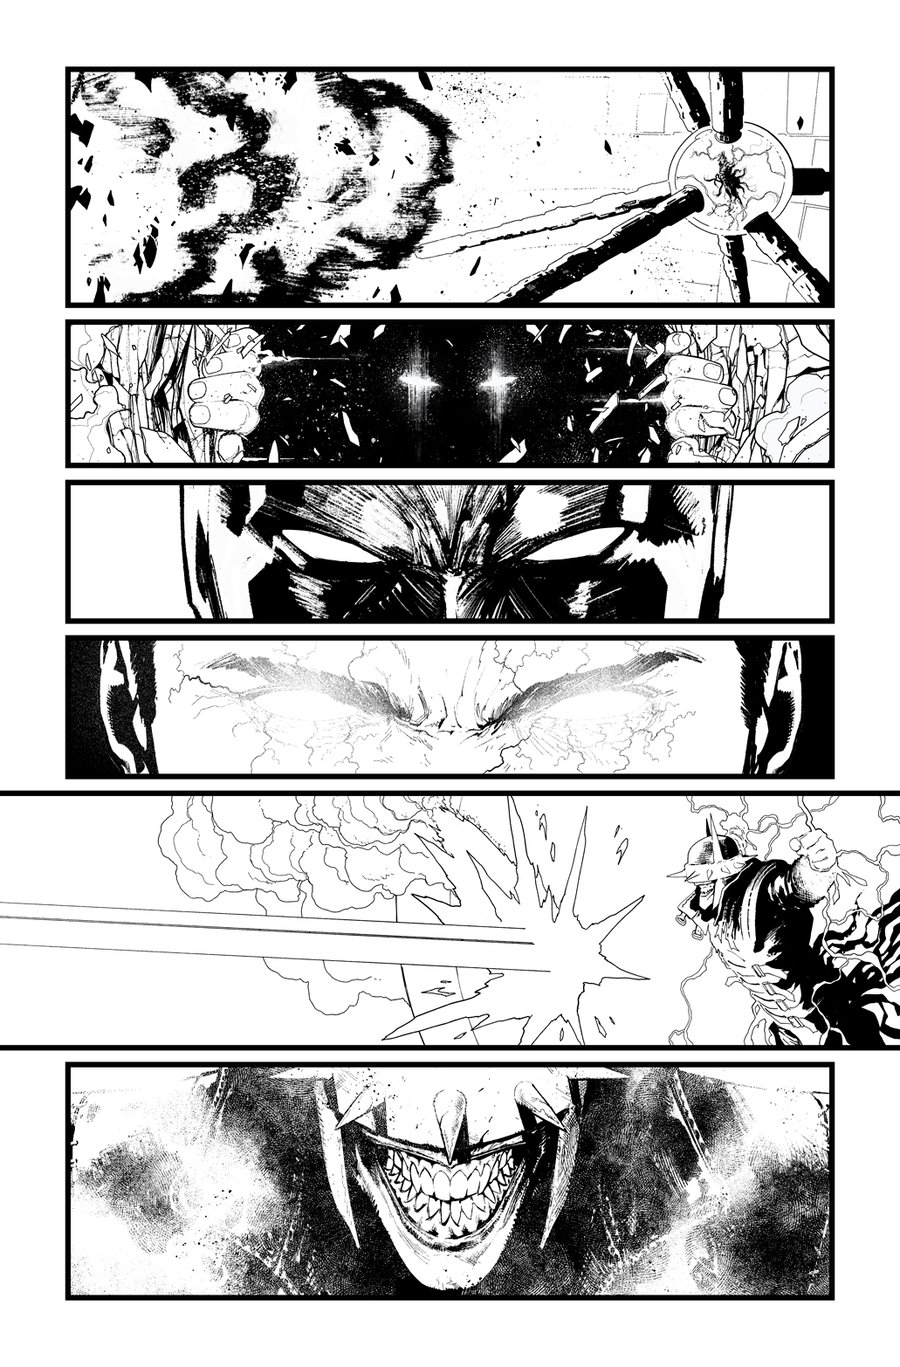 Image of BATMAN/SUPERMAN #2 p.21 ARTIST'S PROOF